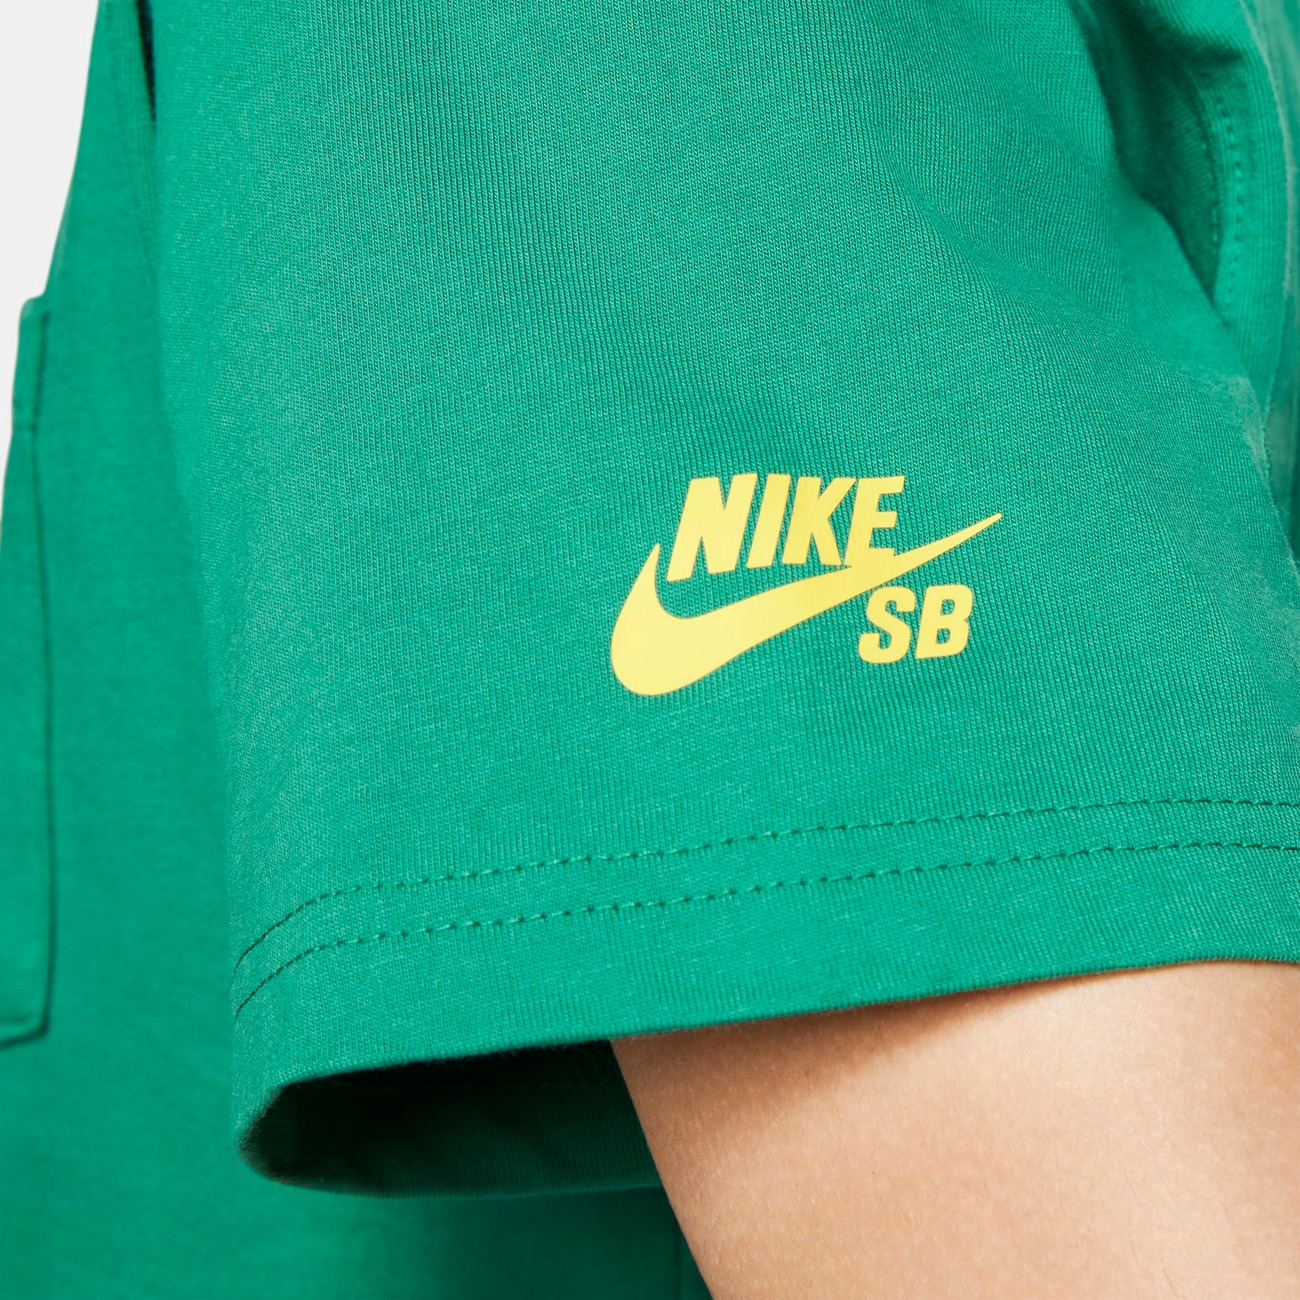 Camiseta Nike SB Masculina - Foto 4